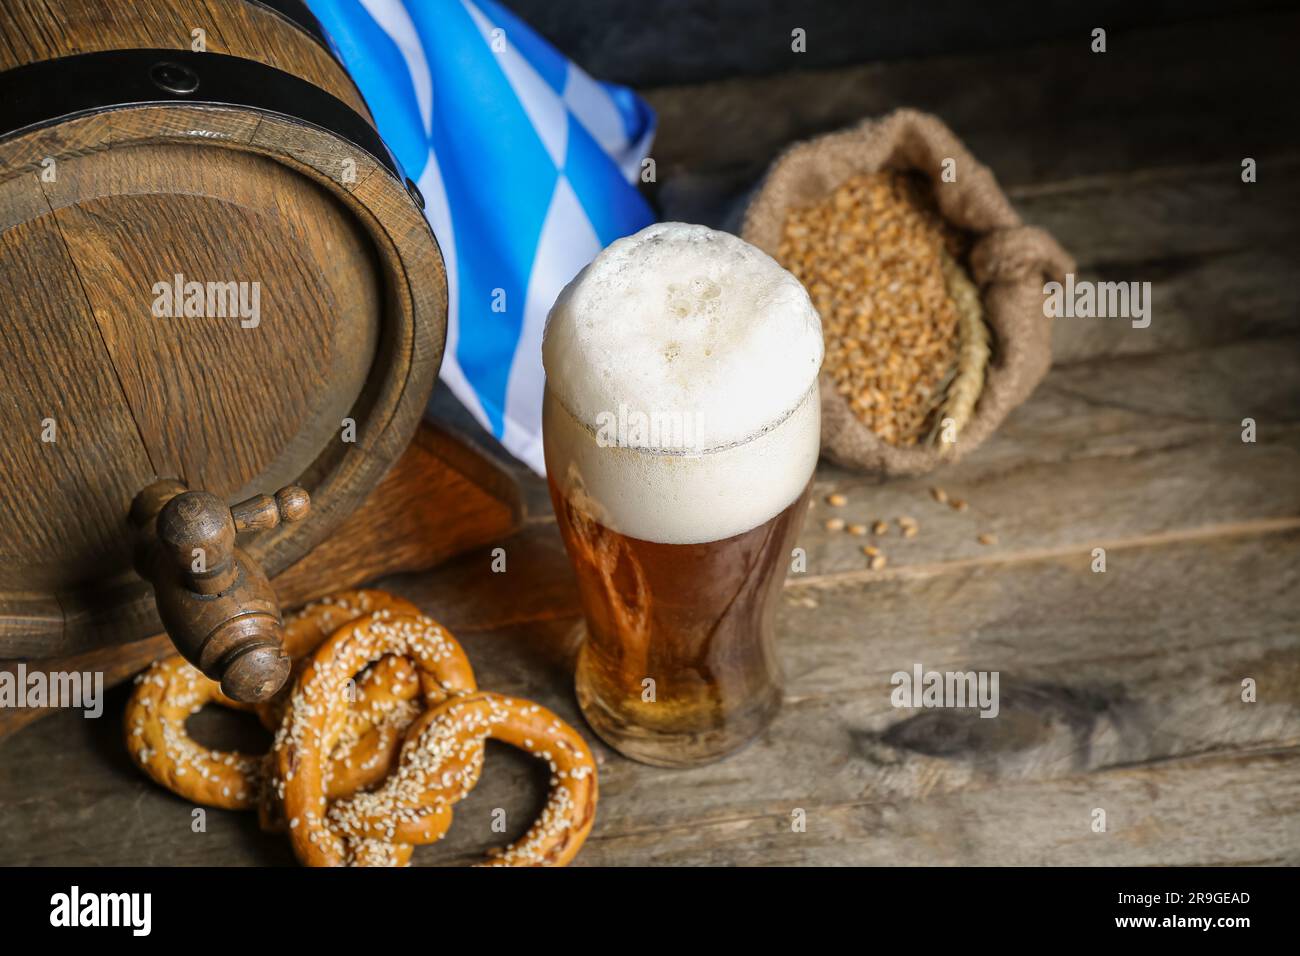 https://c8.alamy.com/comp/2R9GEAD/glass-of-cold-beer-pretzels-and-barrel-on-wooden-background-oktoberfest-celebration-2R9GEAD.jpg